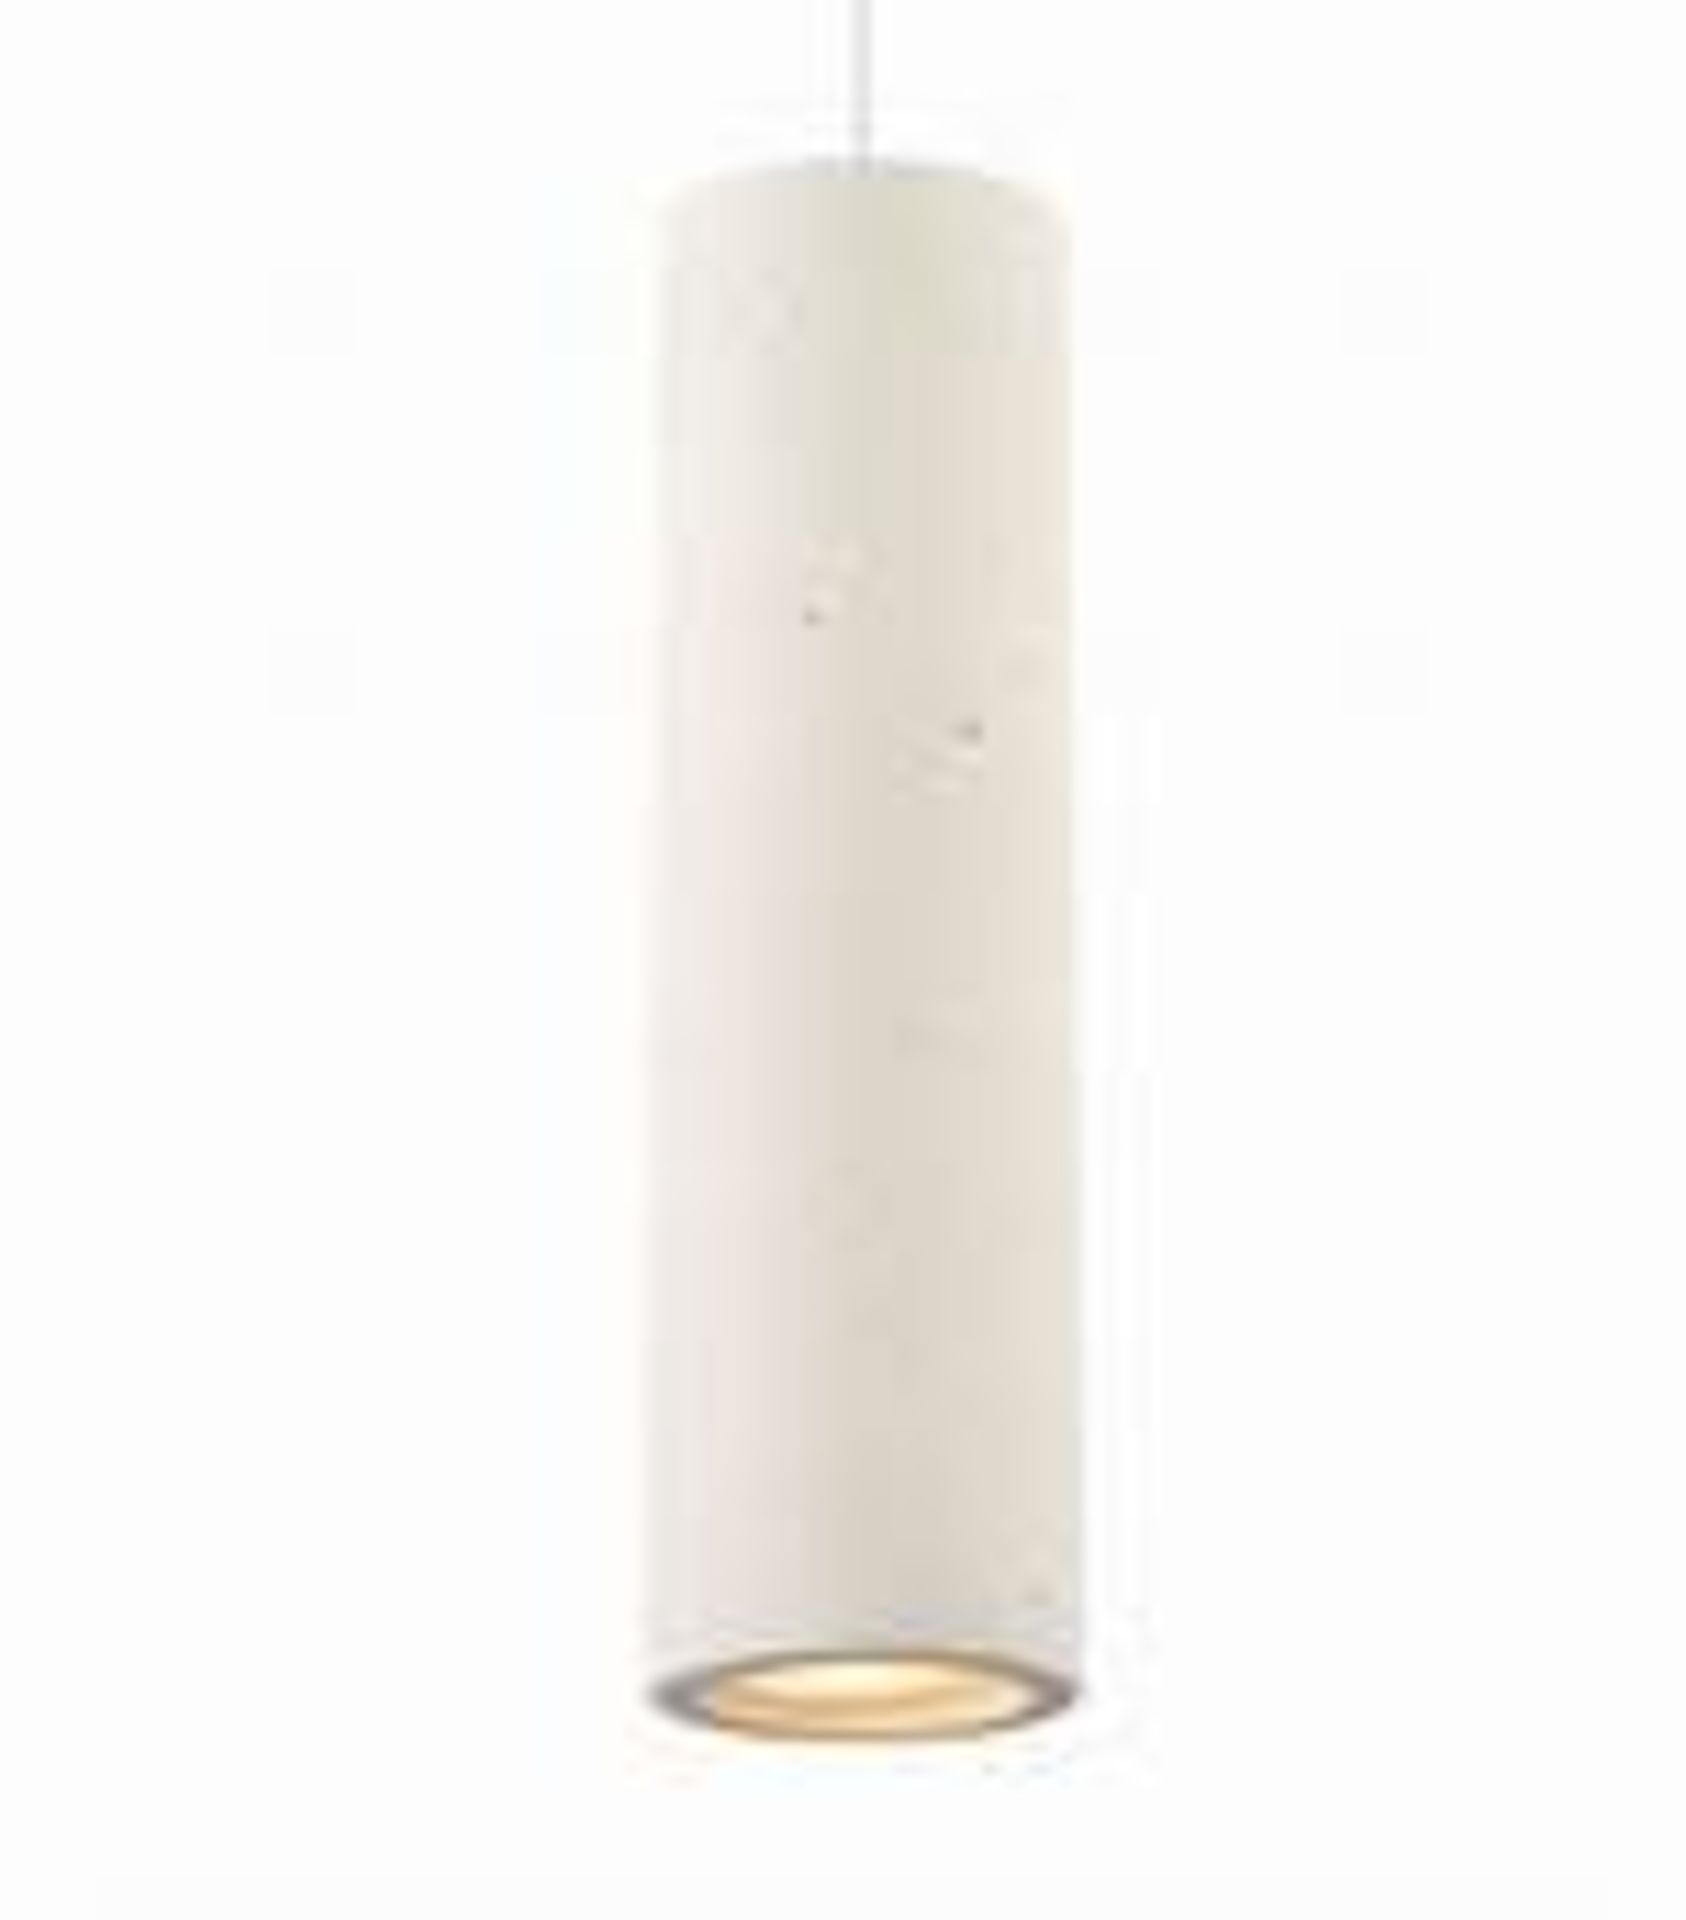 Endon Collection 80672 â€“ Architectural inspired white sandstone concrete finish pendant, suspended